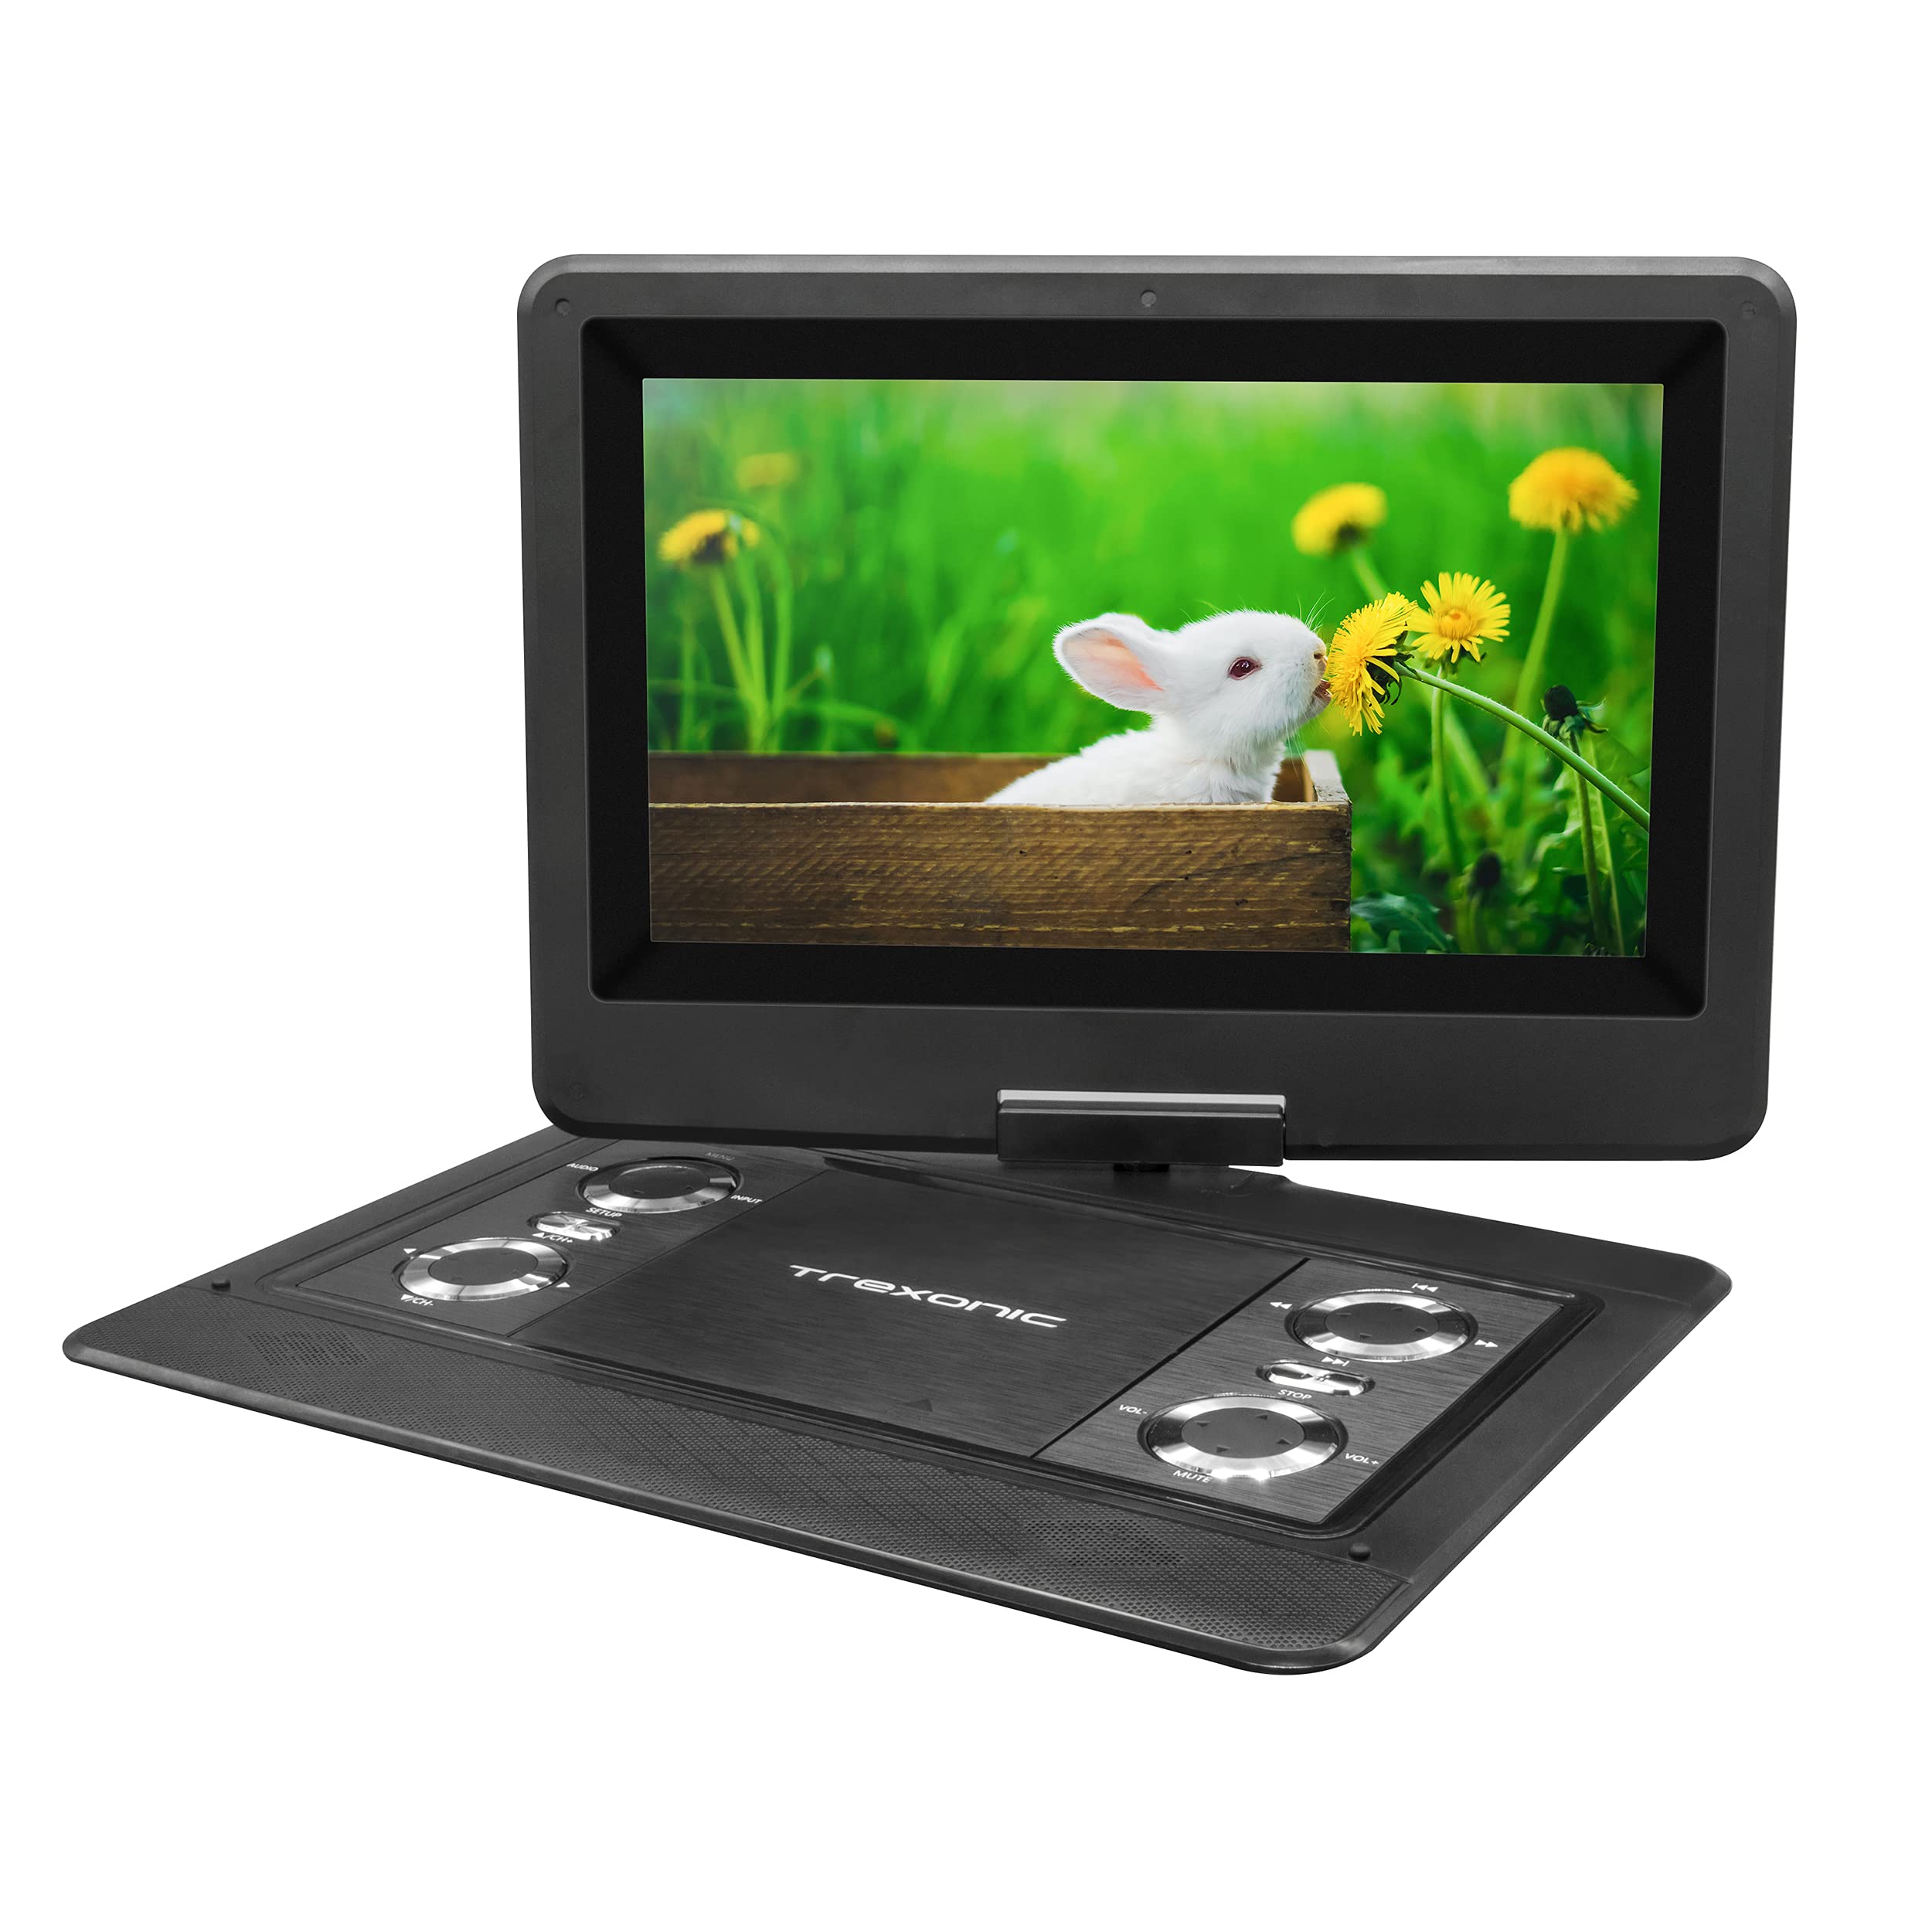 Trexonic 12.5 英寸便携式电视+DVD 播放器，带彩色 TFT LED 屏幕和 USB/HD/AV...